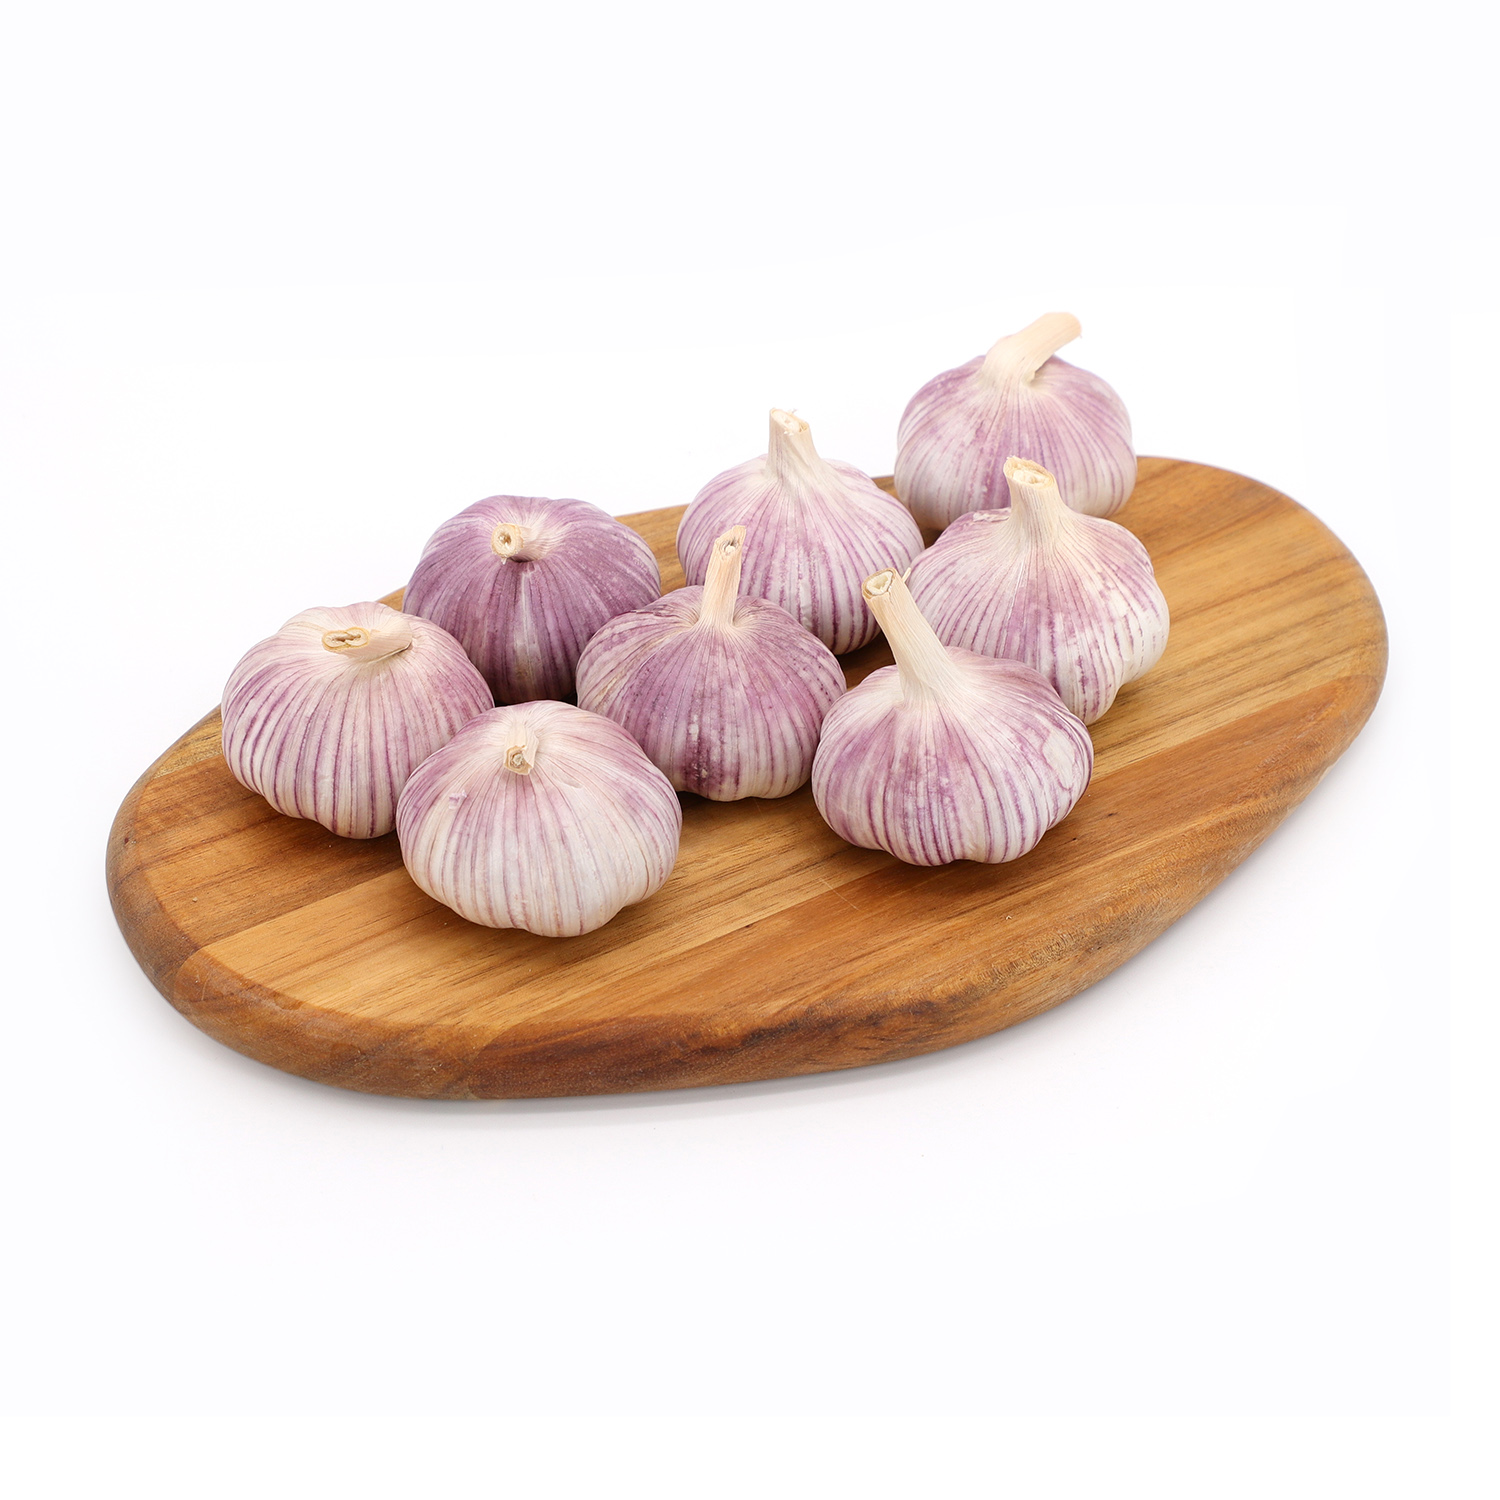 Price Information of Jinxiang Garlic in June 24th